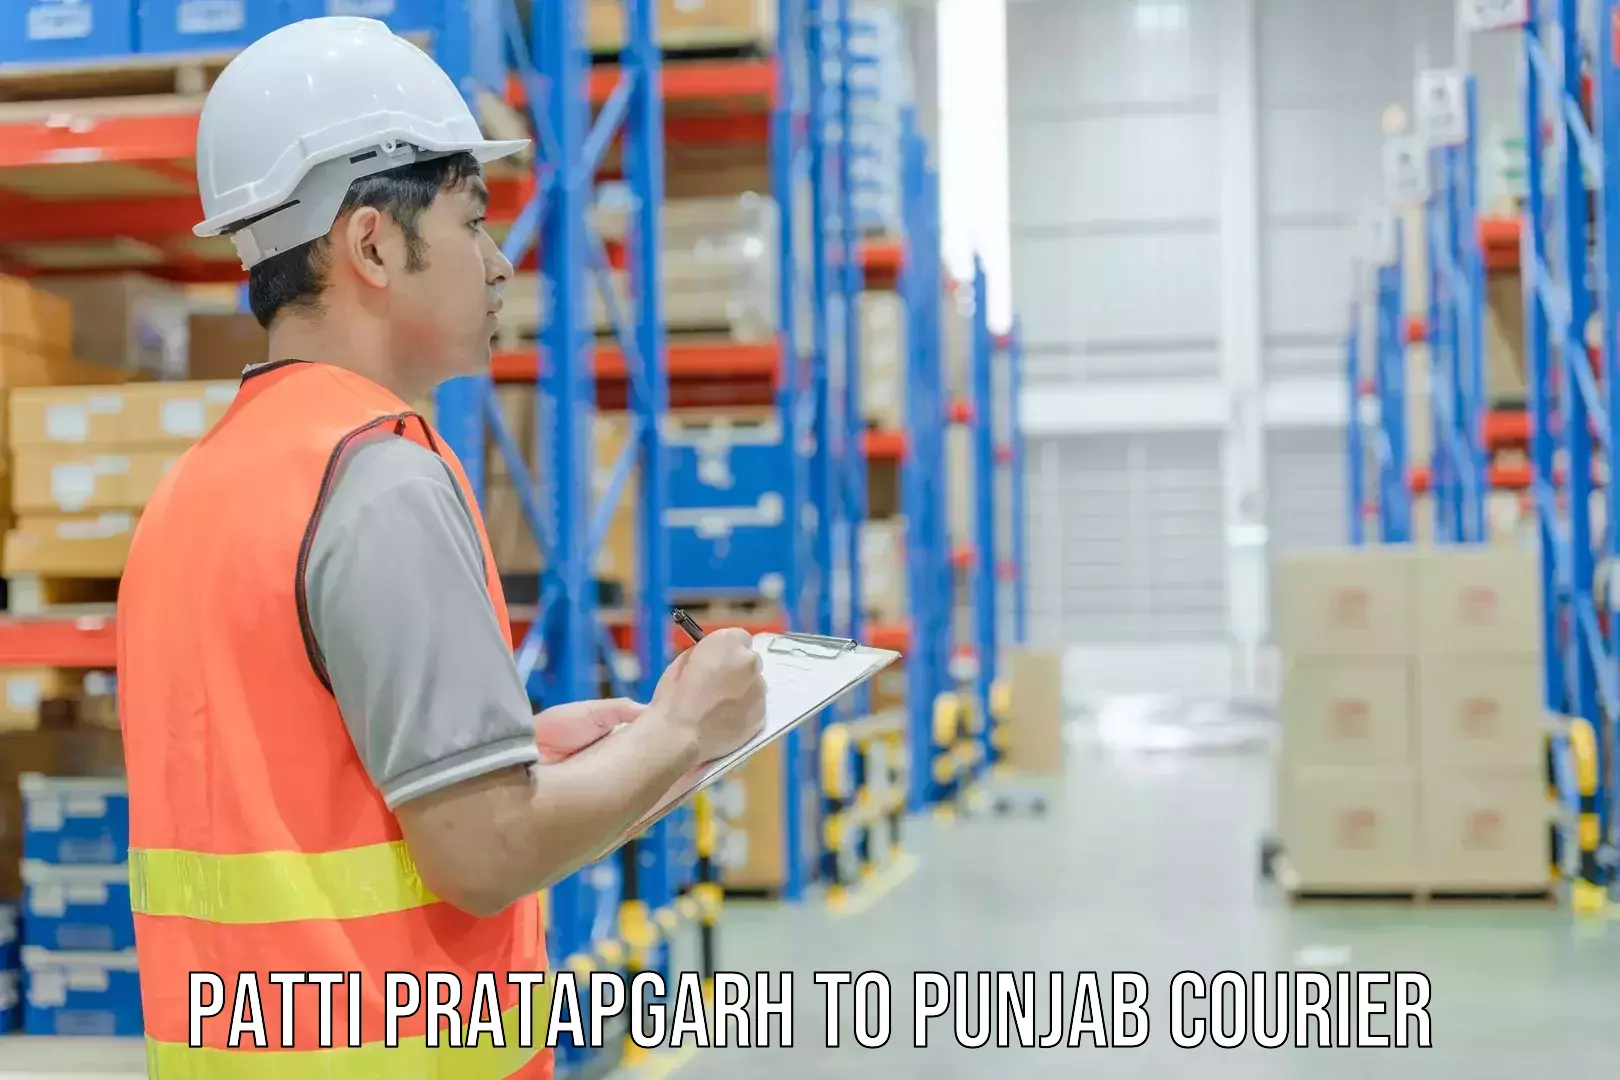 Express delivery solutions Patti Pratapgarh to Ludhiana